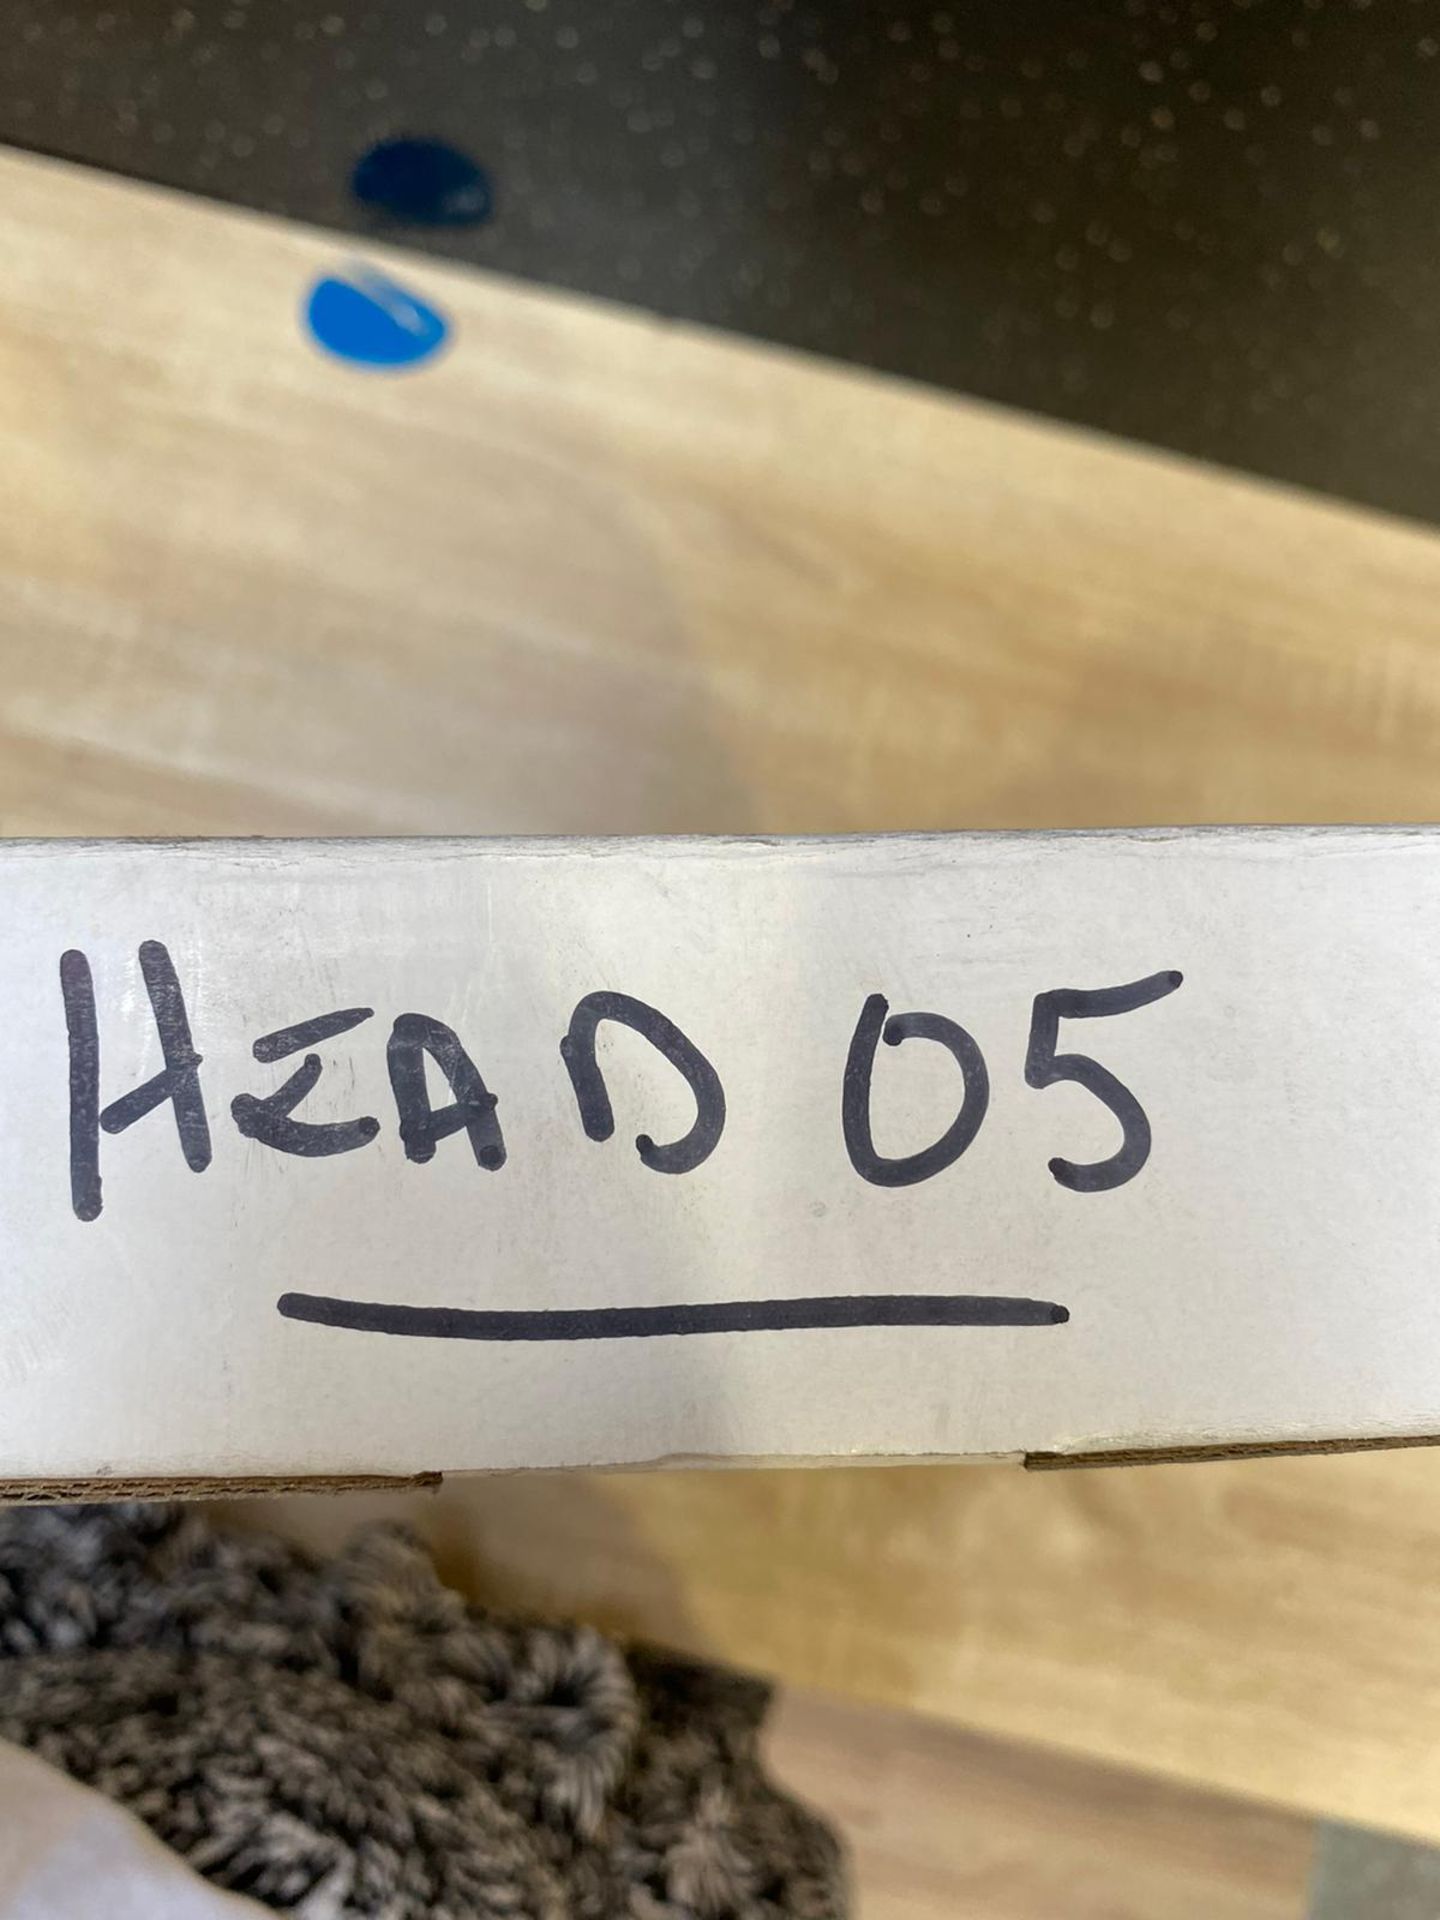 1 x Concealed Ultra Slim Rectangular Shower Head - Code: HEAD05 - New Stock - Location: Altrincham - - Image 2 of 2